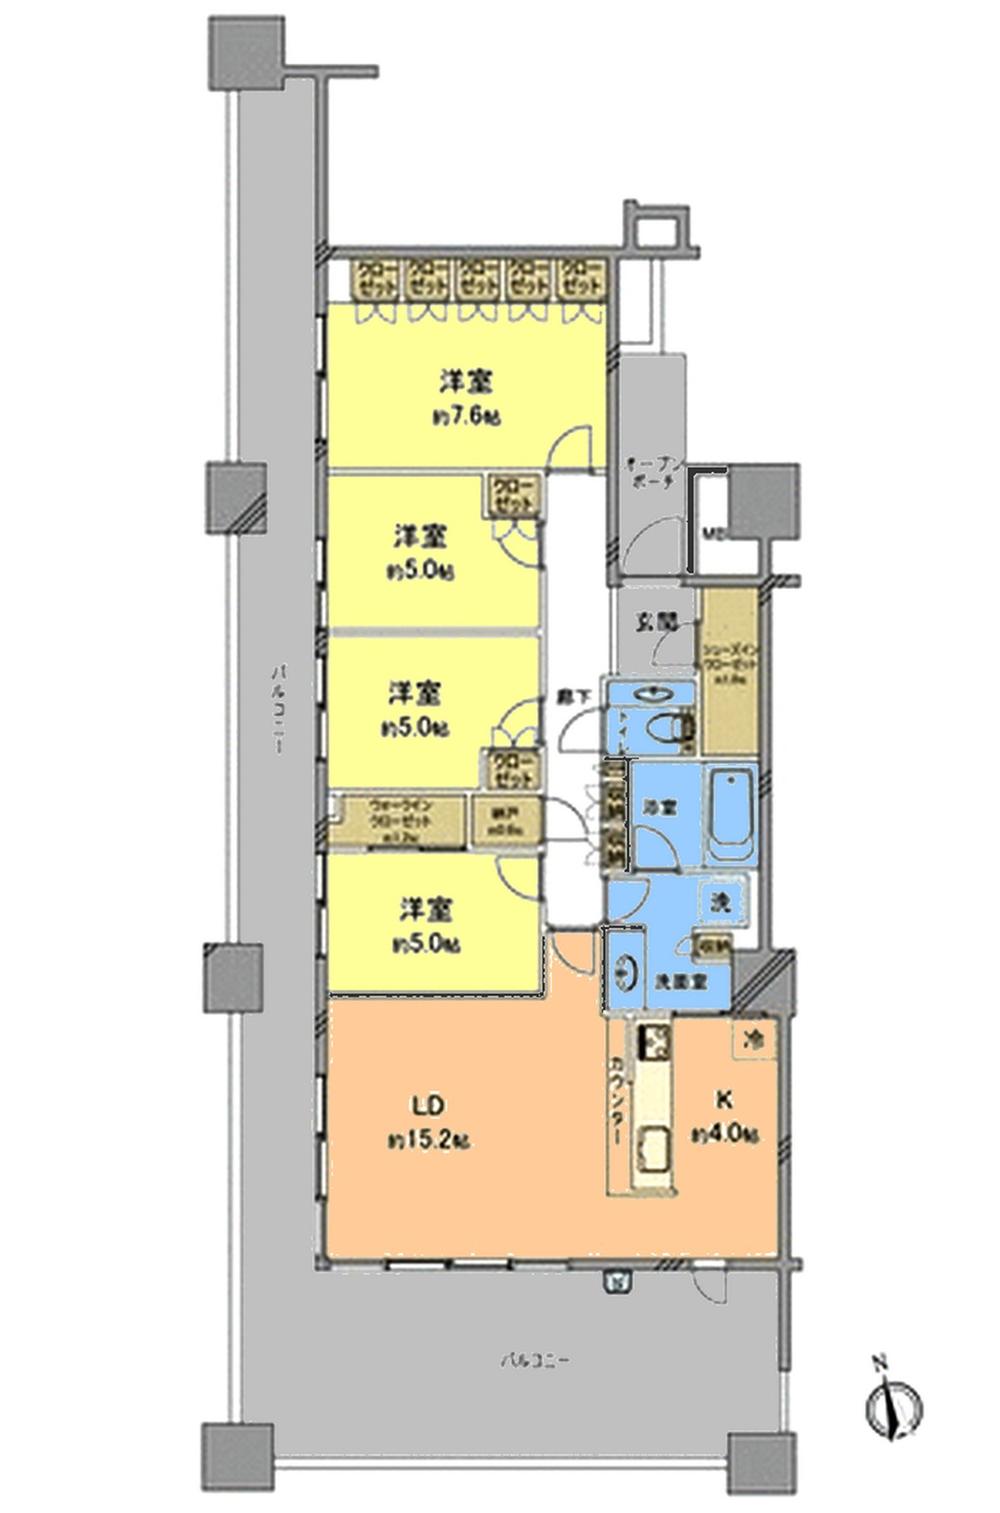 Floor plan. 4LDK, Price 52,800,000 yen, Footprint 101.76 sq m , Bright floor plan of the balcony area 50.47 sq m 2 sided balcony